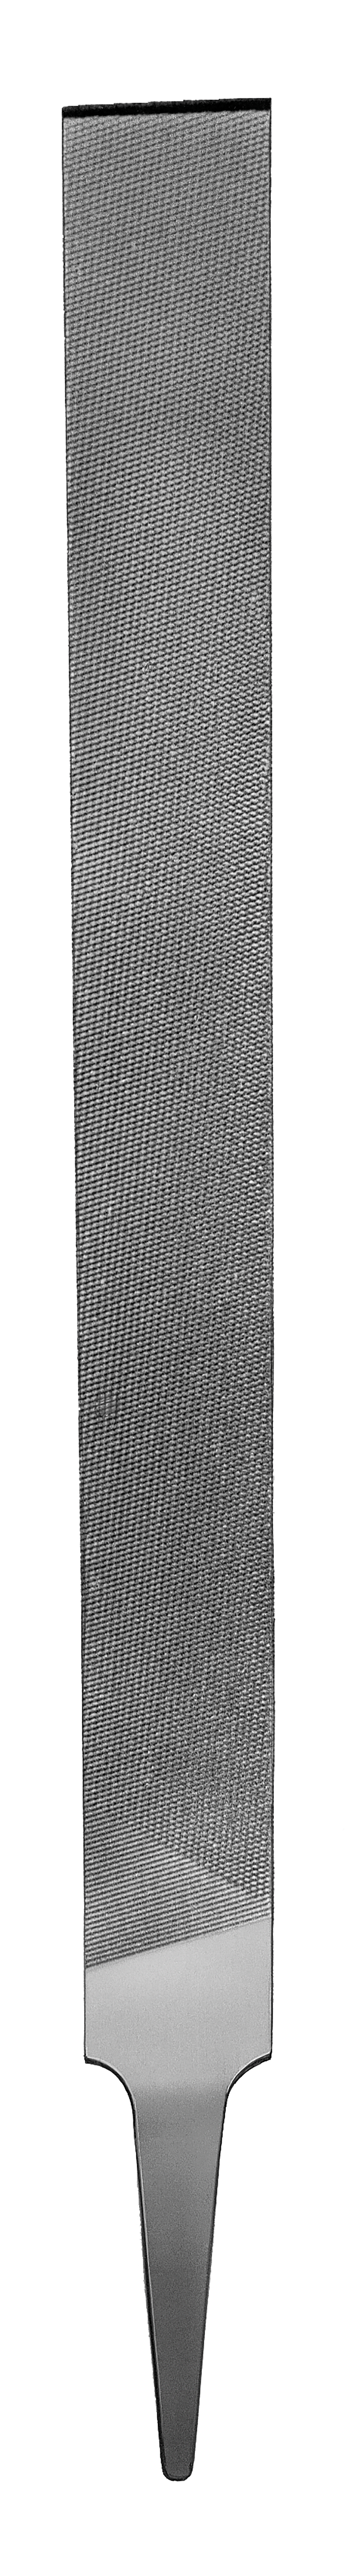 Foto of  Werkplaatsvijlen conform DIN 7261, vorm D, keep 3, 250 mm 